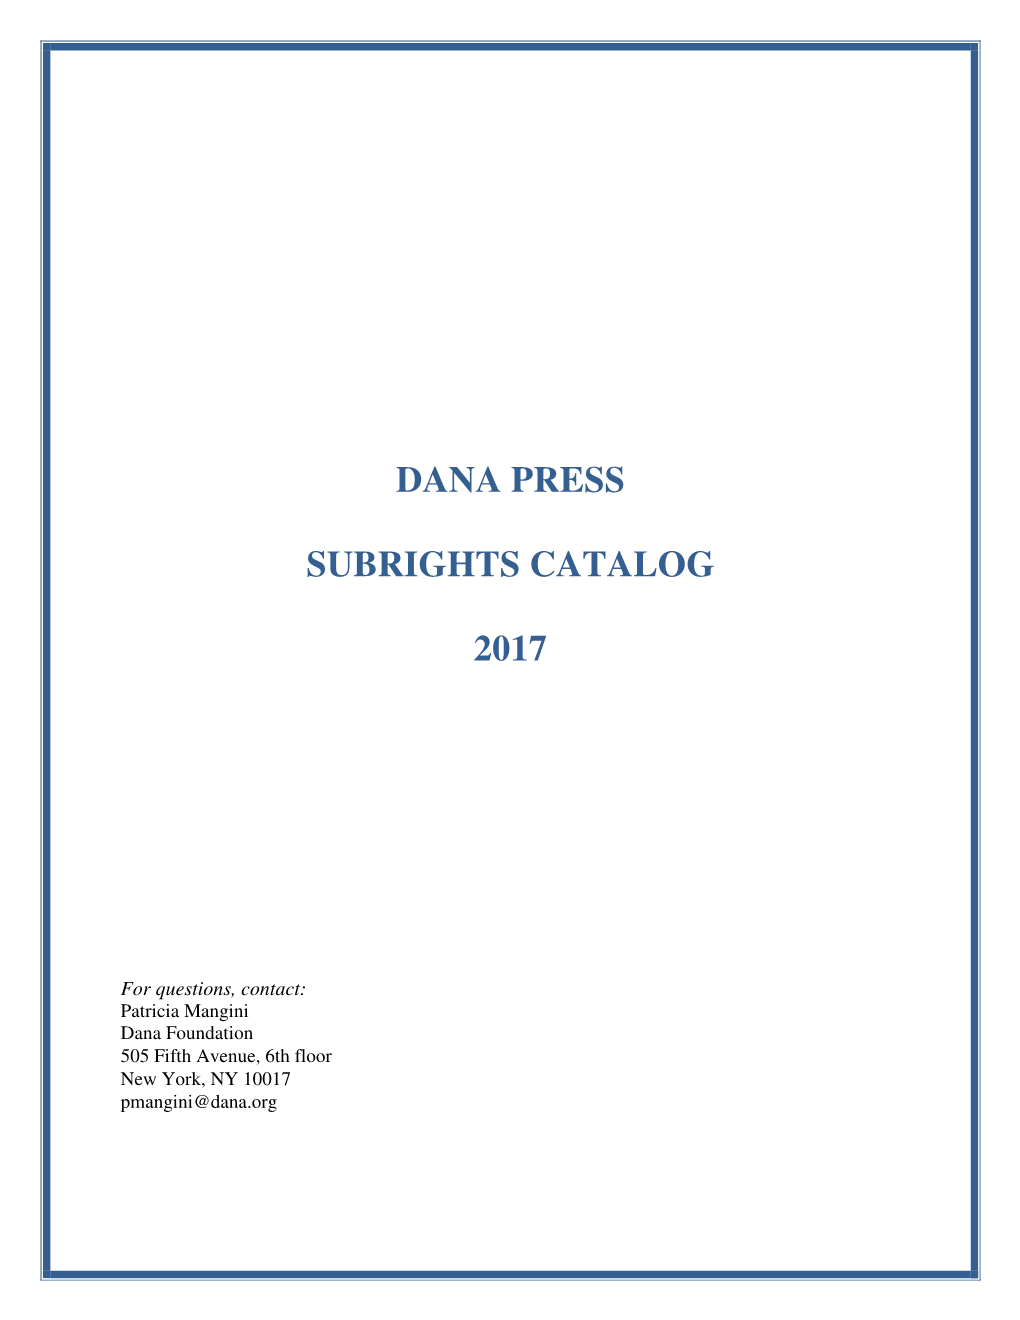 Dana Press Subrights Catalog